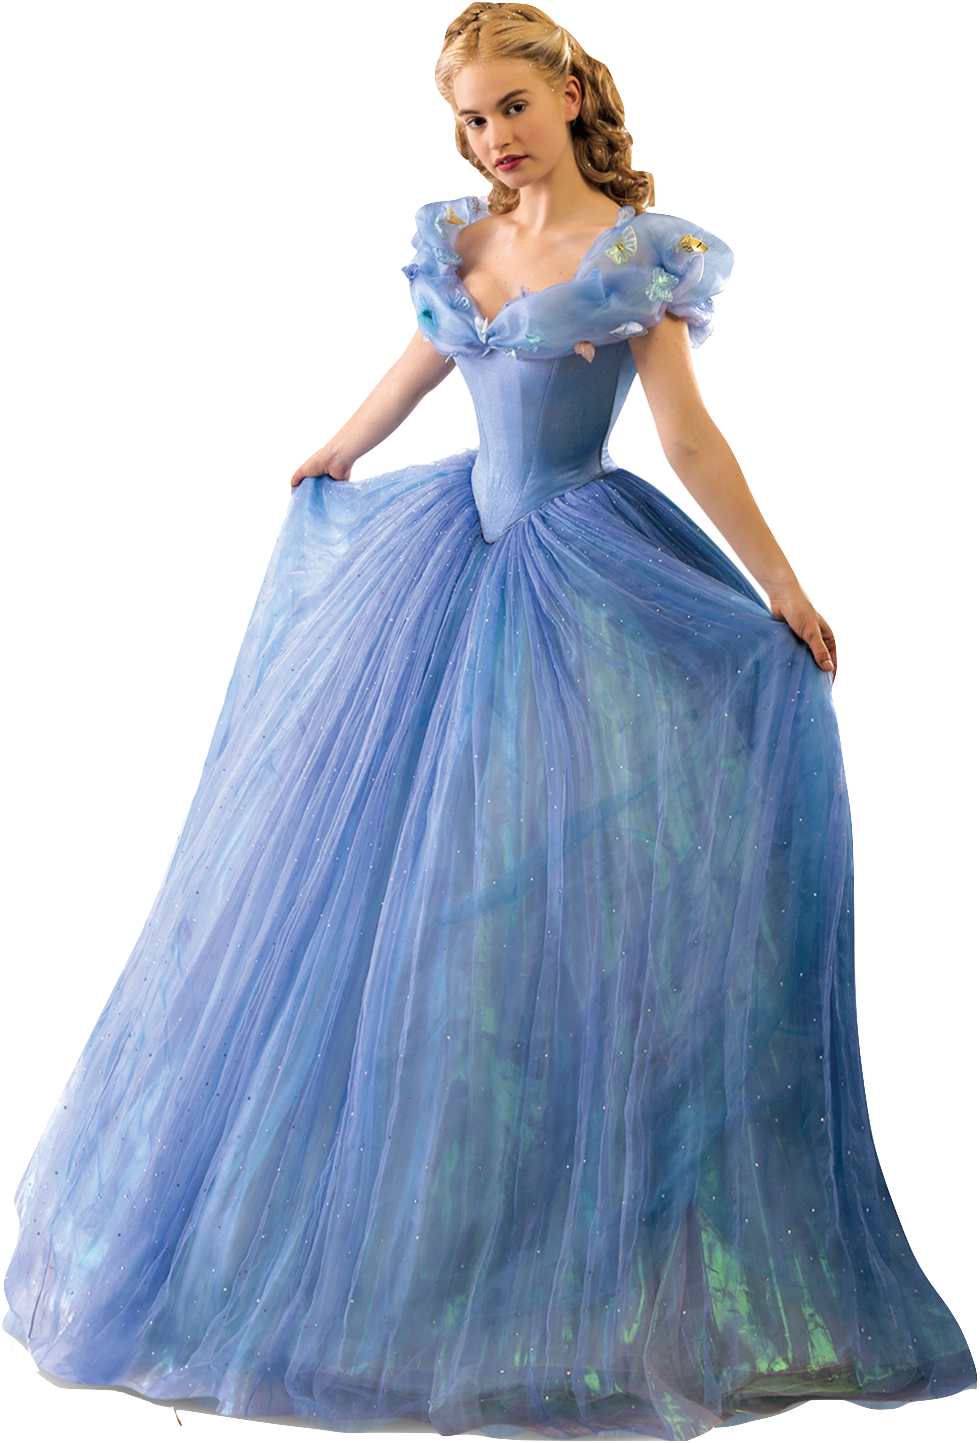 Nickelbackloverxoxox 57 2 Lily James As Cinderella-full - Cinderella Ball Gown (980x1443)